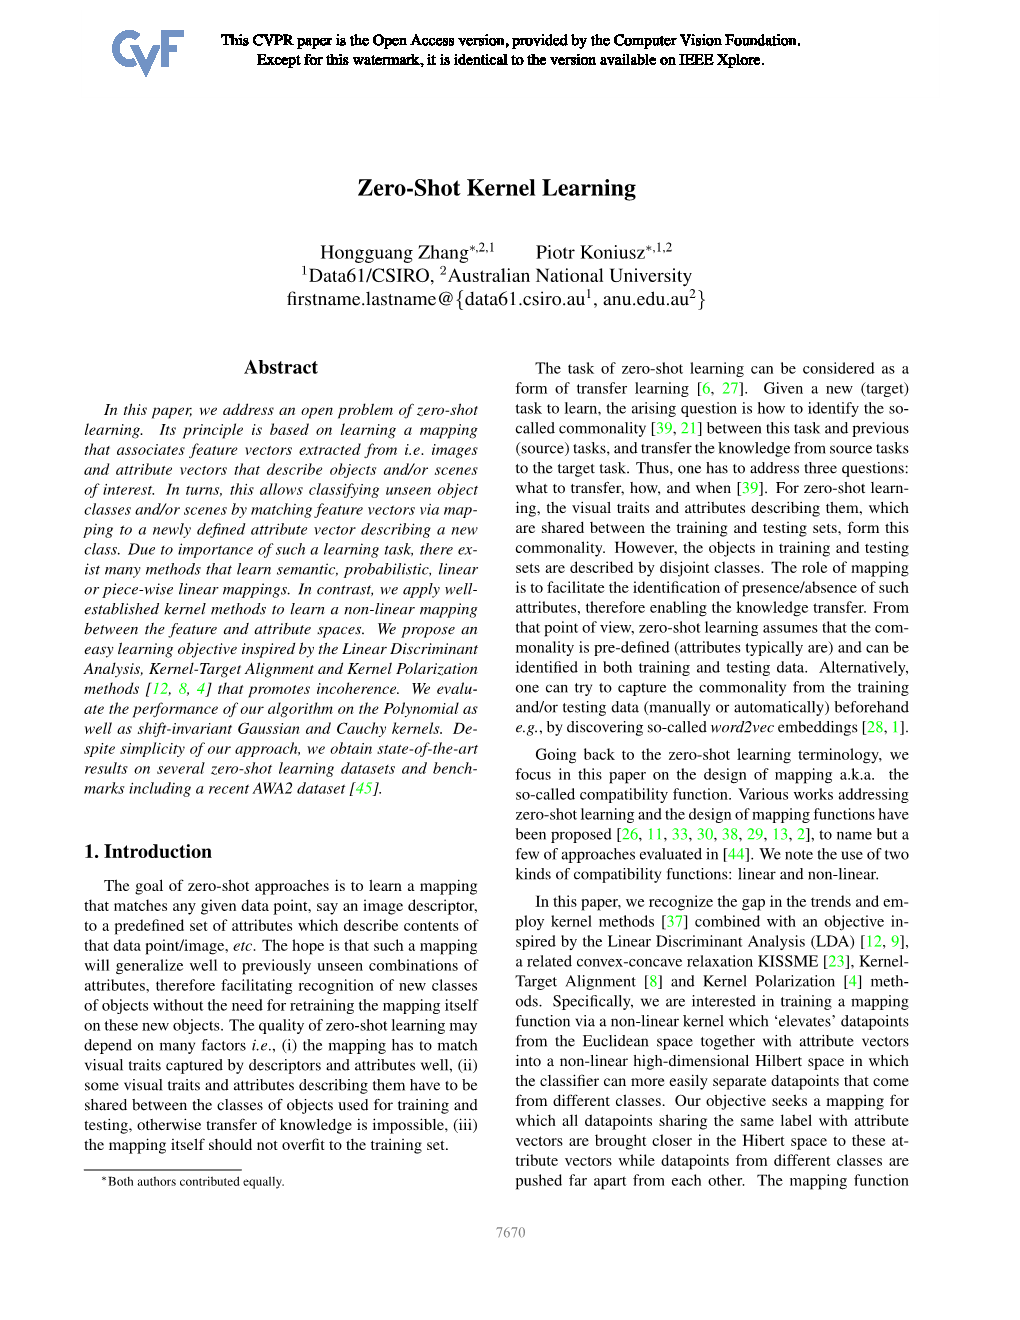 Zero-Shot Kernel Learning